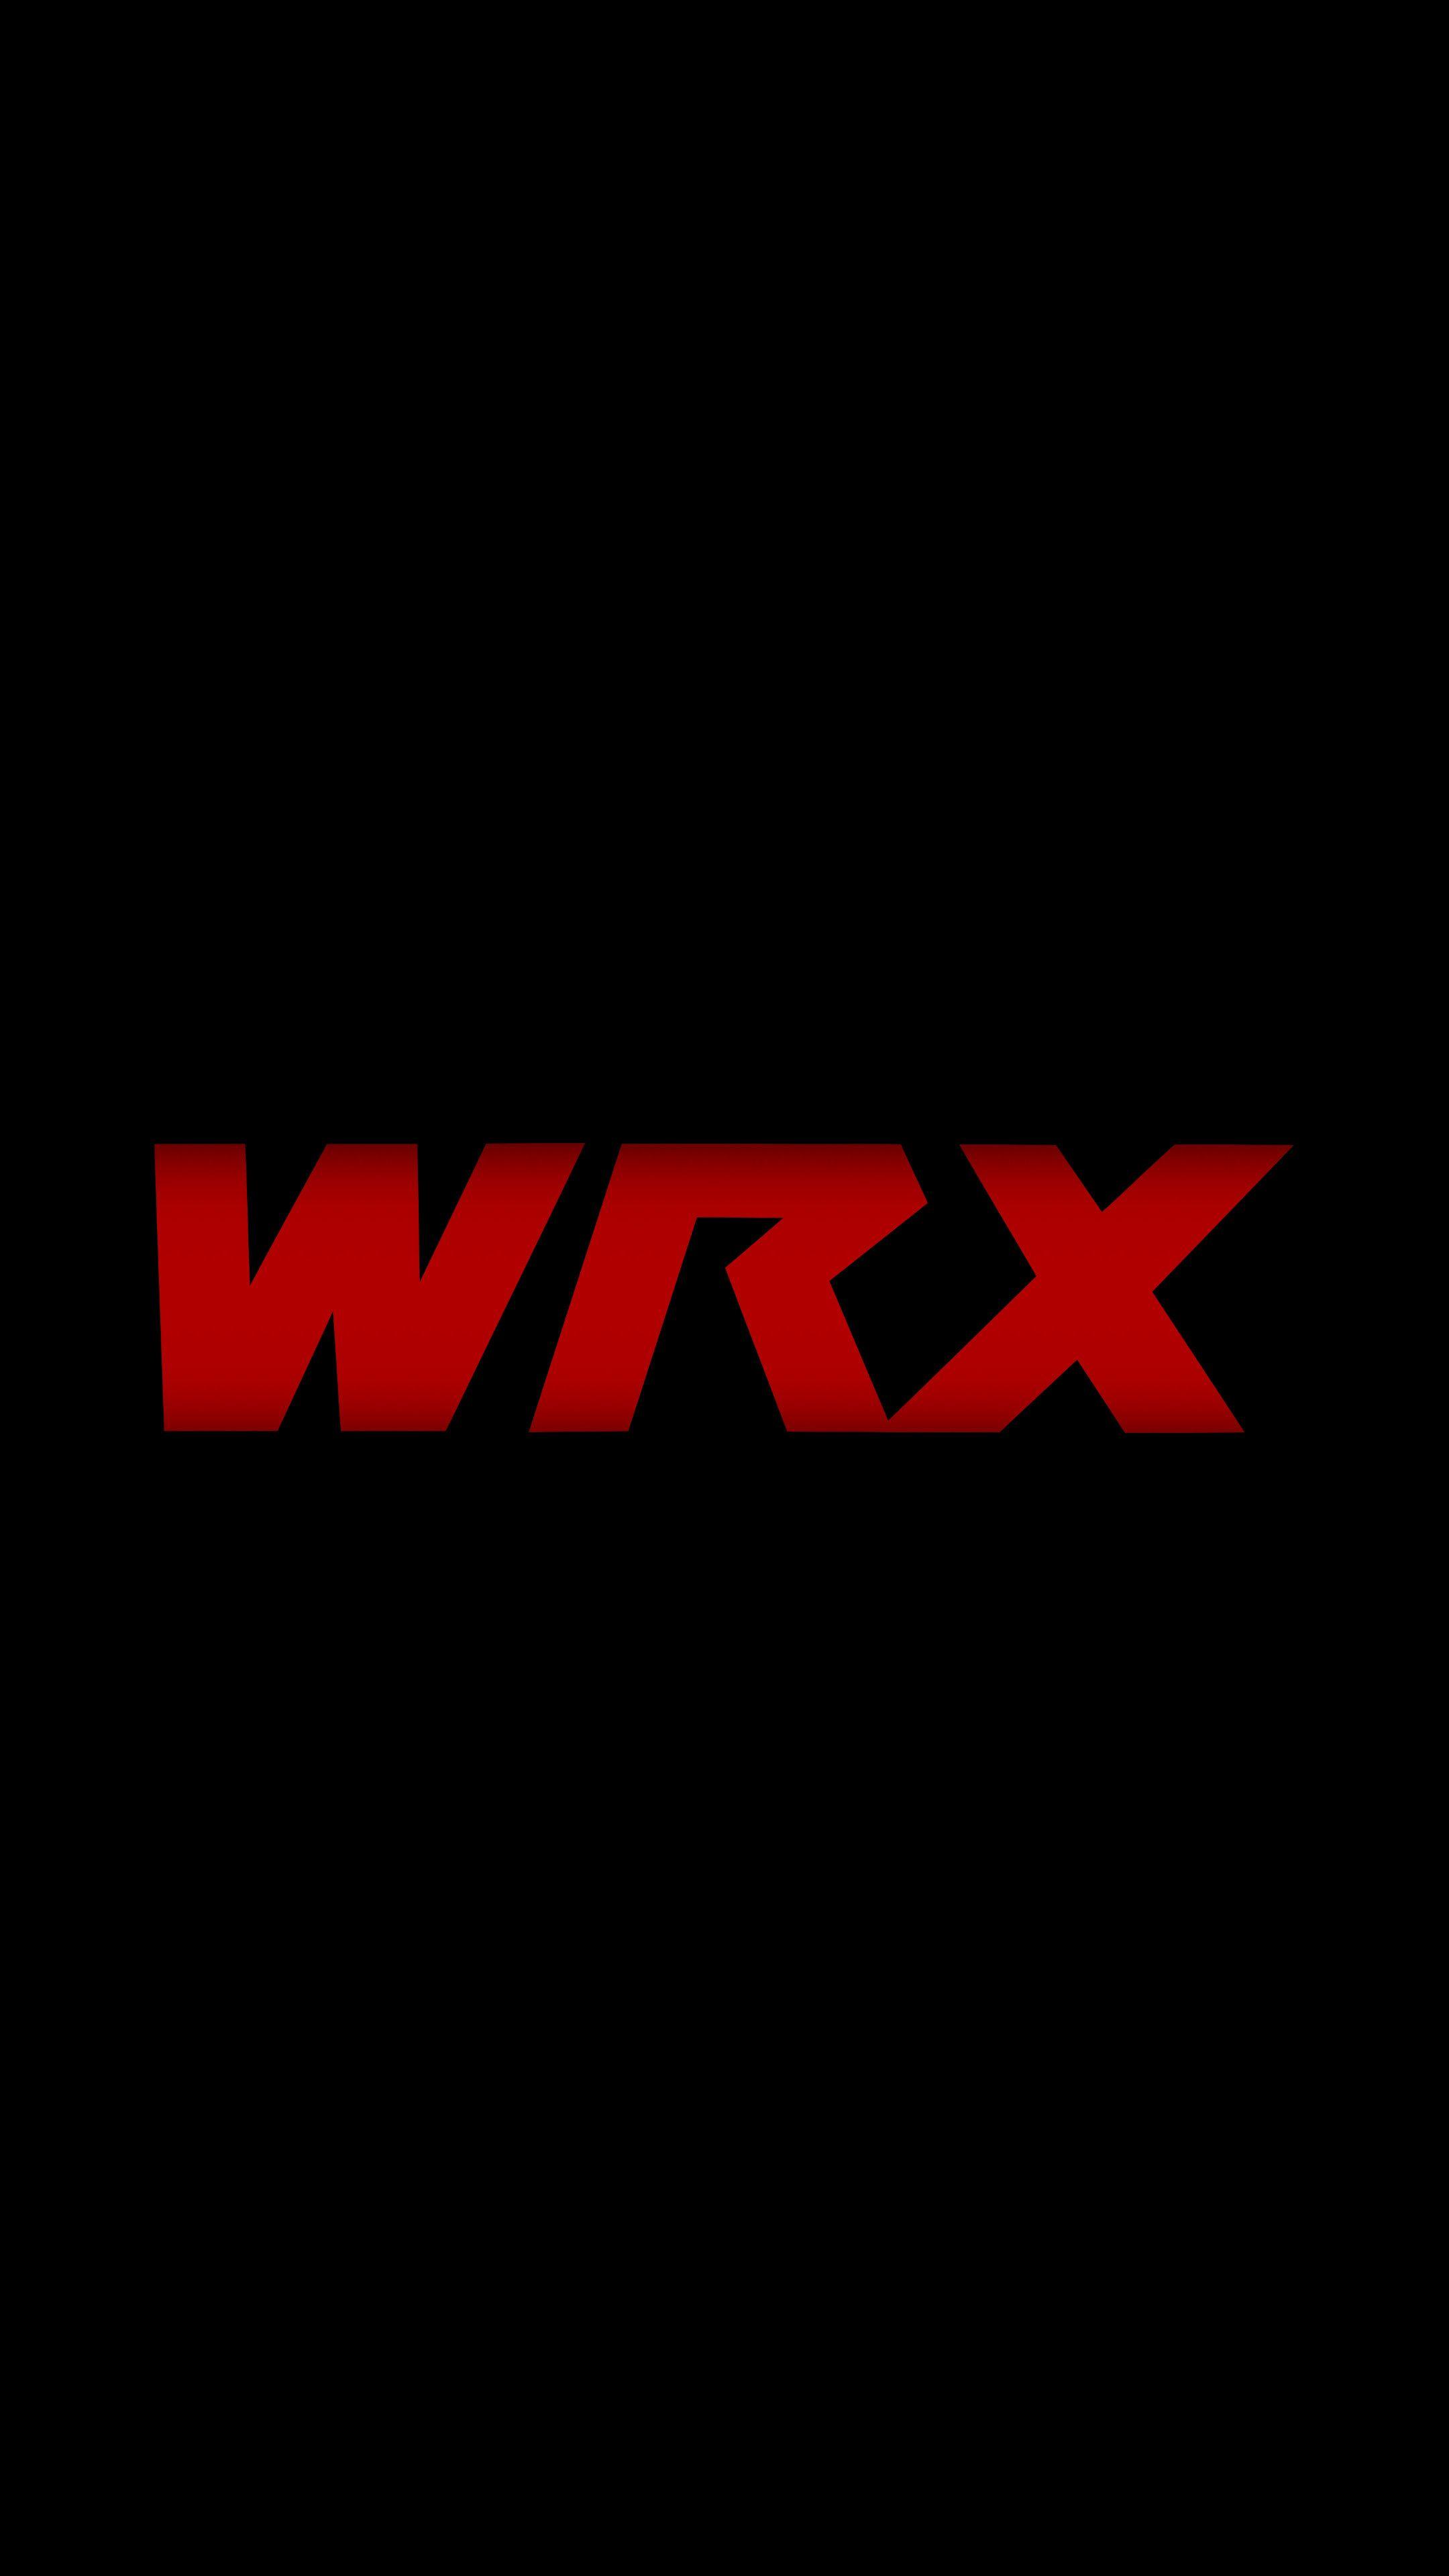 subaru wrx logo wallpaper